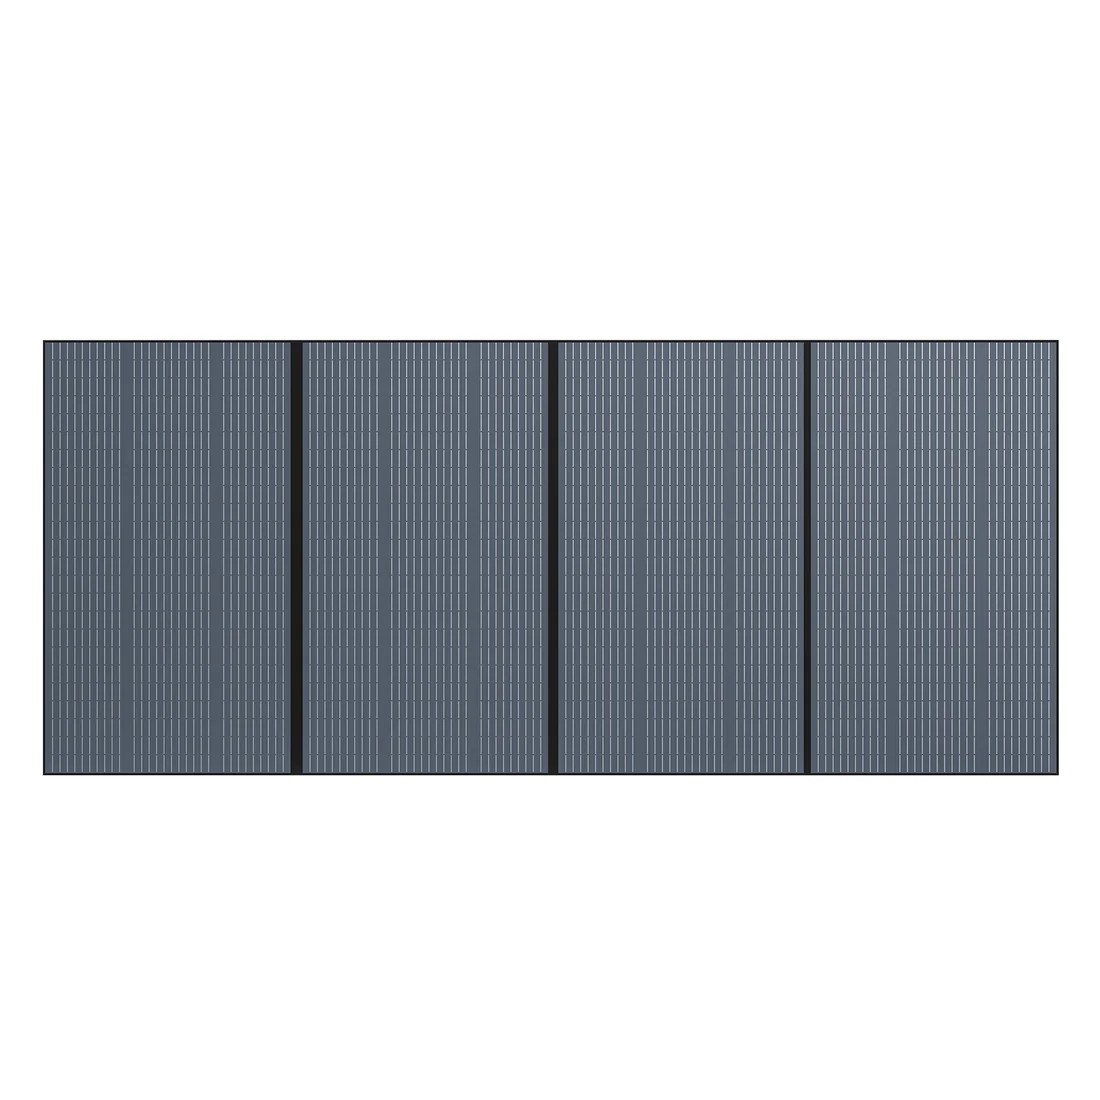 Солнечная панель Bluetti PV350 Solar Panel цена 23999 грн - фотография 2